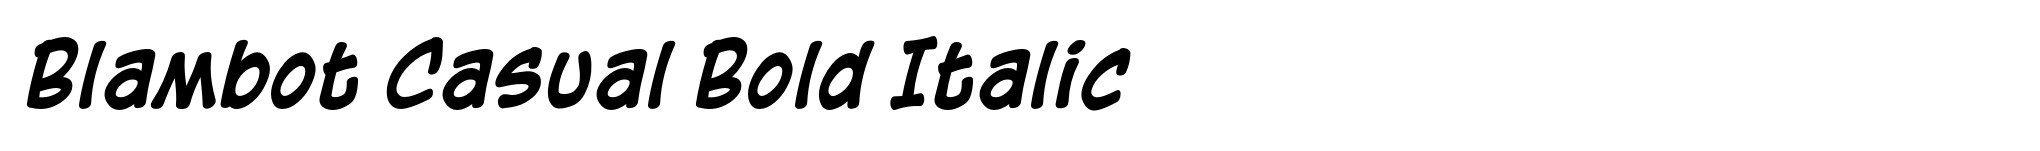 Blambot Casual Bold Italic image